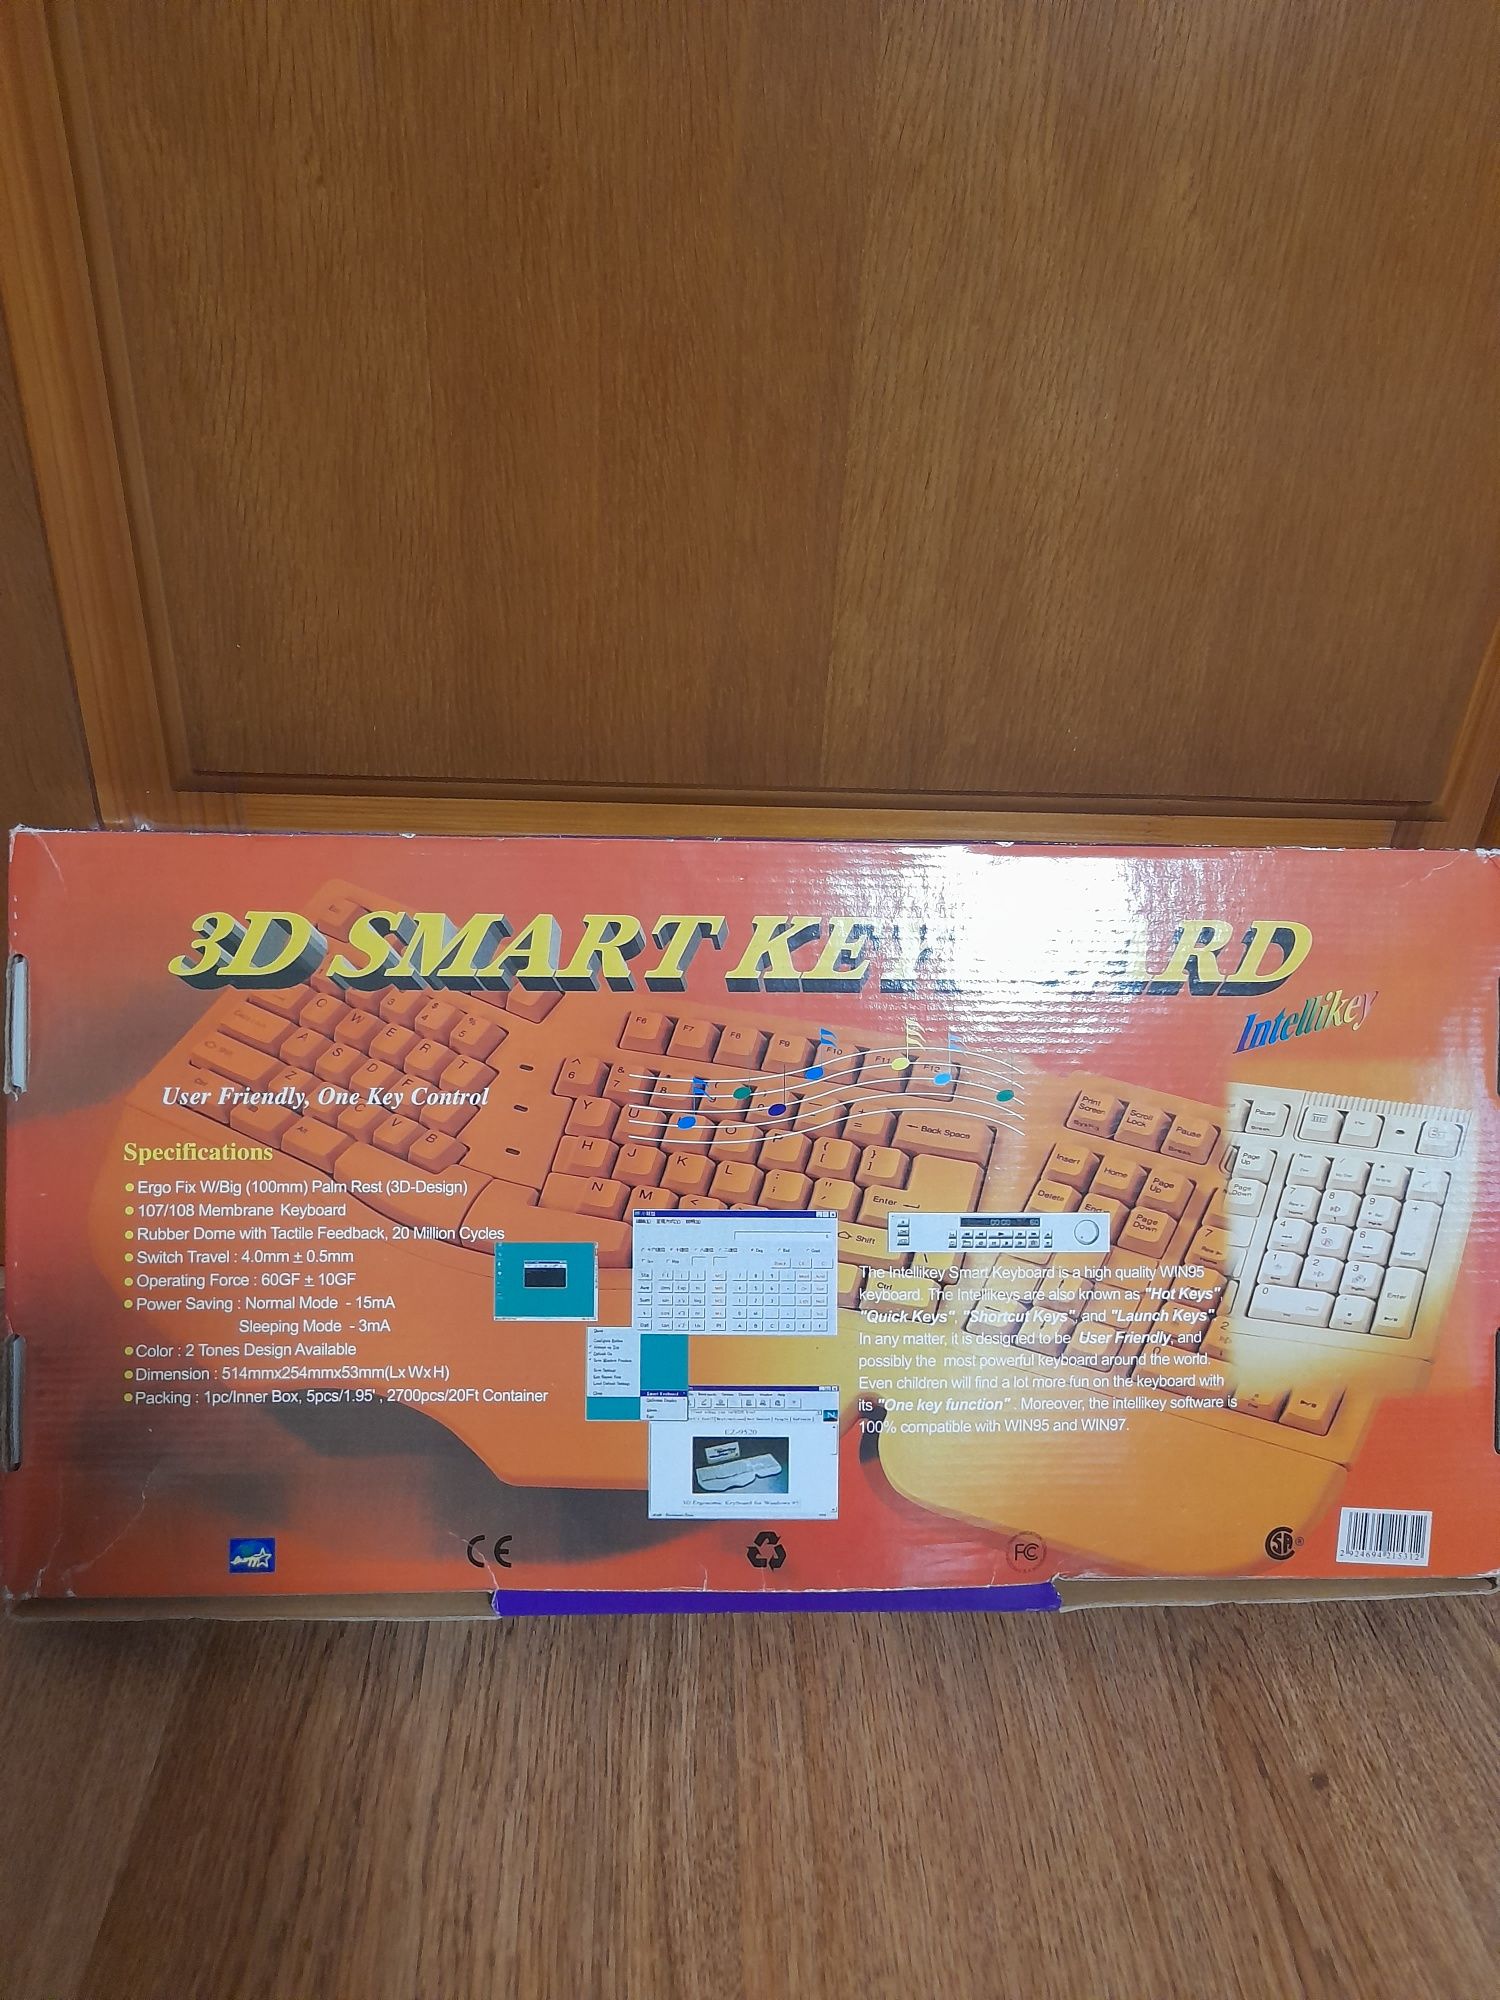 Продам клавиатуру 3D SMART KEYBOARD.